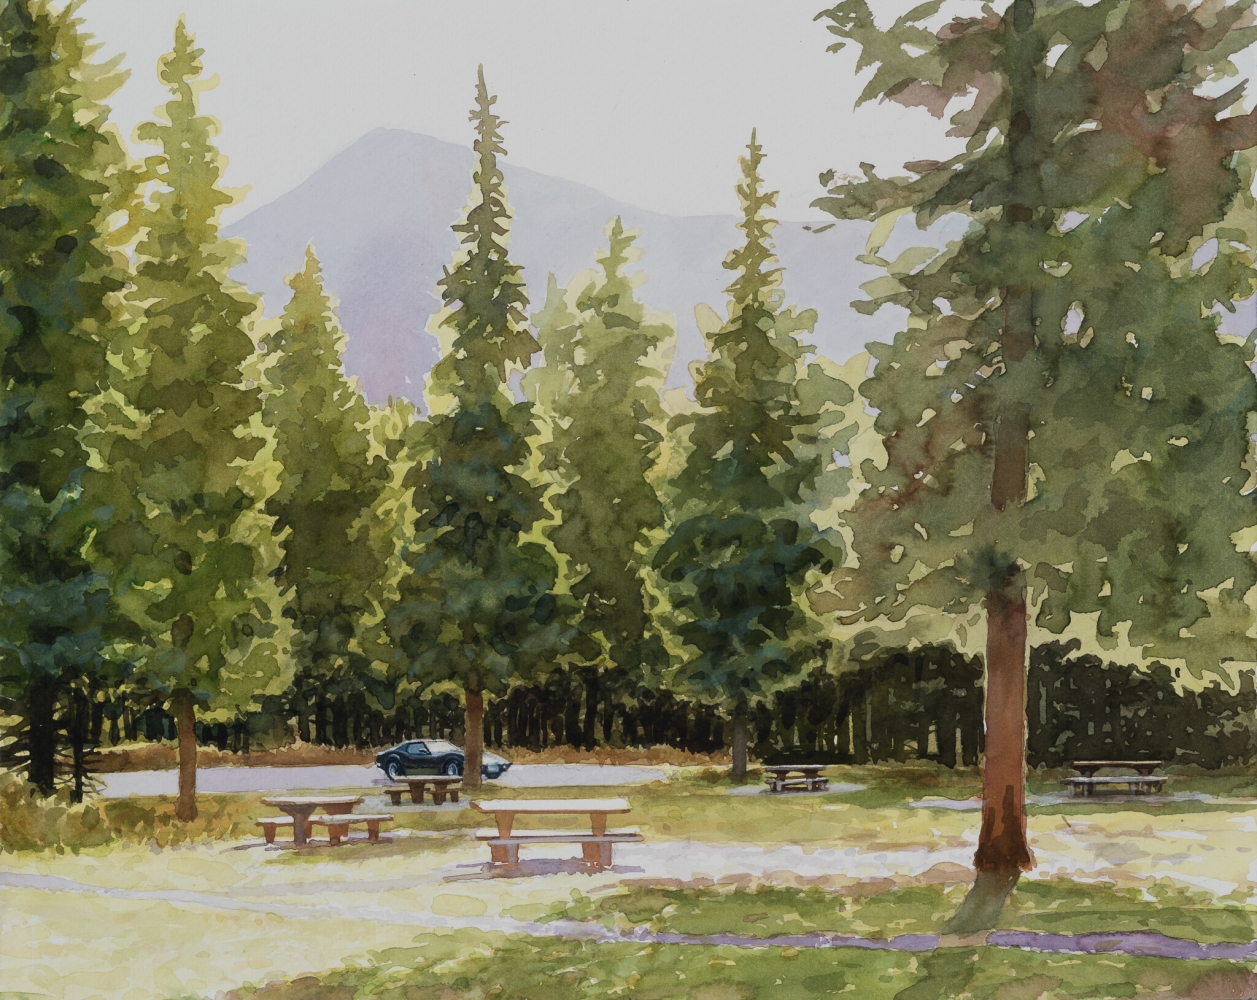 Tim Gardner

Picnic Area

2021

Watercolor on paper

12 x 15 inches (30.5 x 38.1 cm)

TG 613

INQUIRE